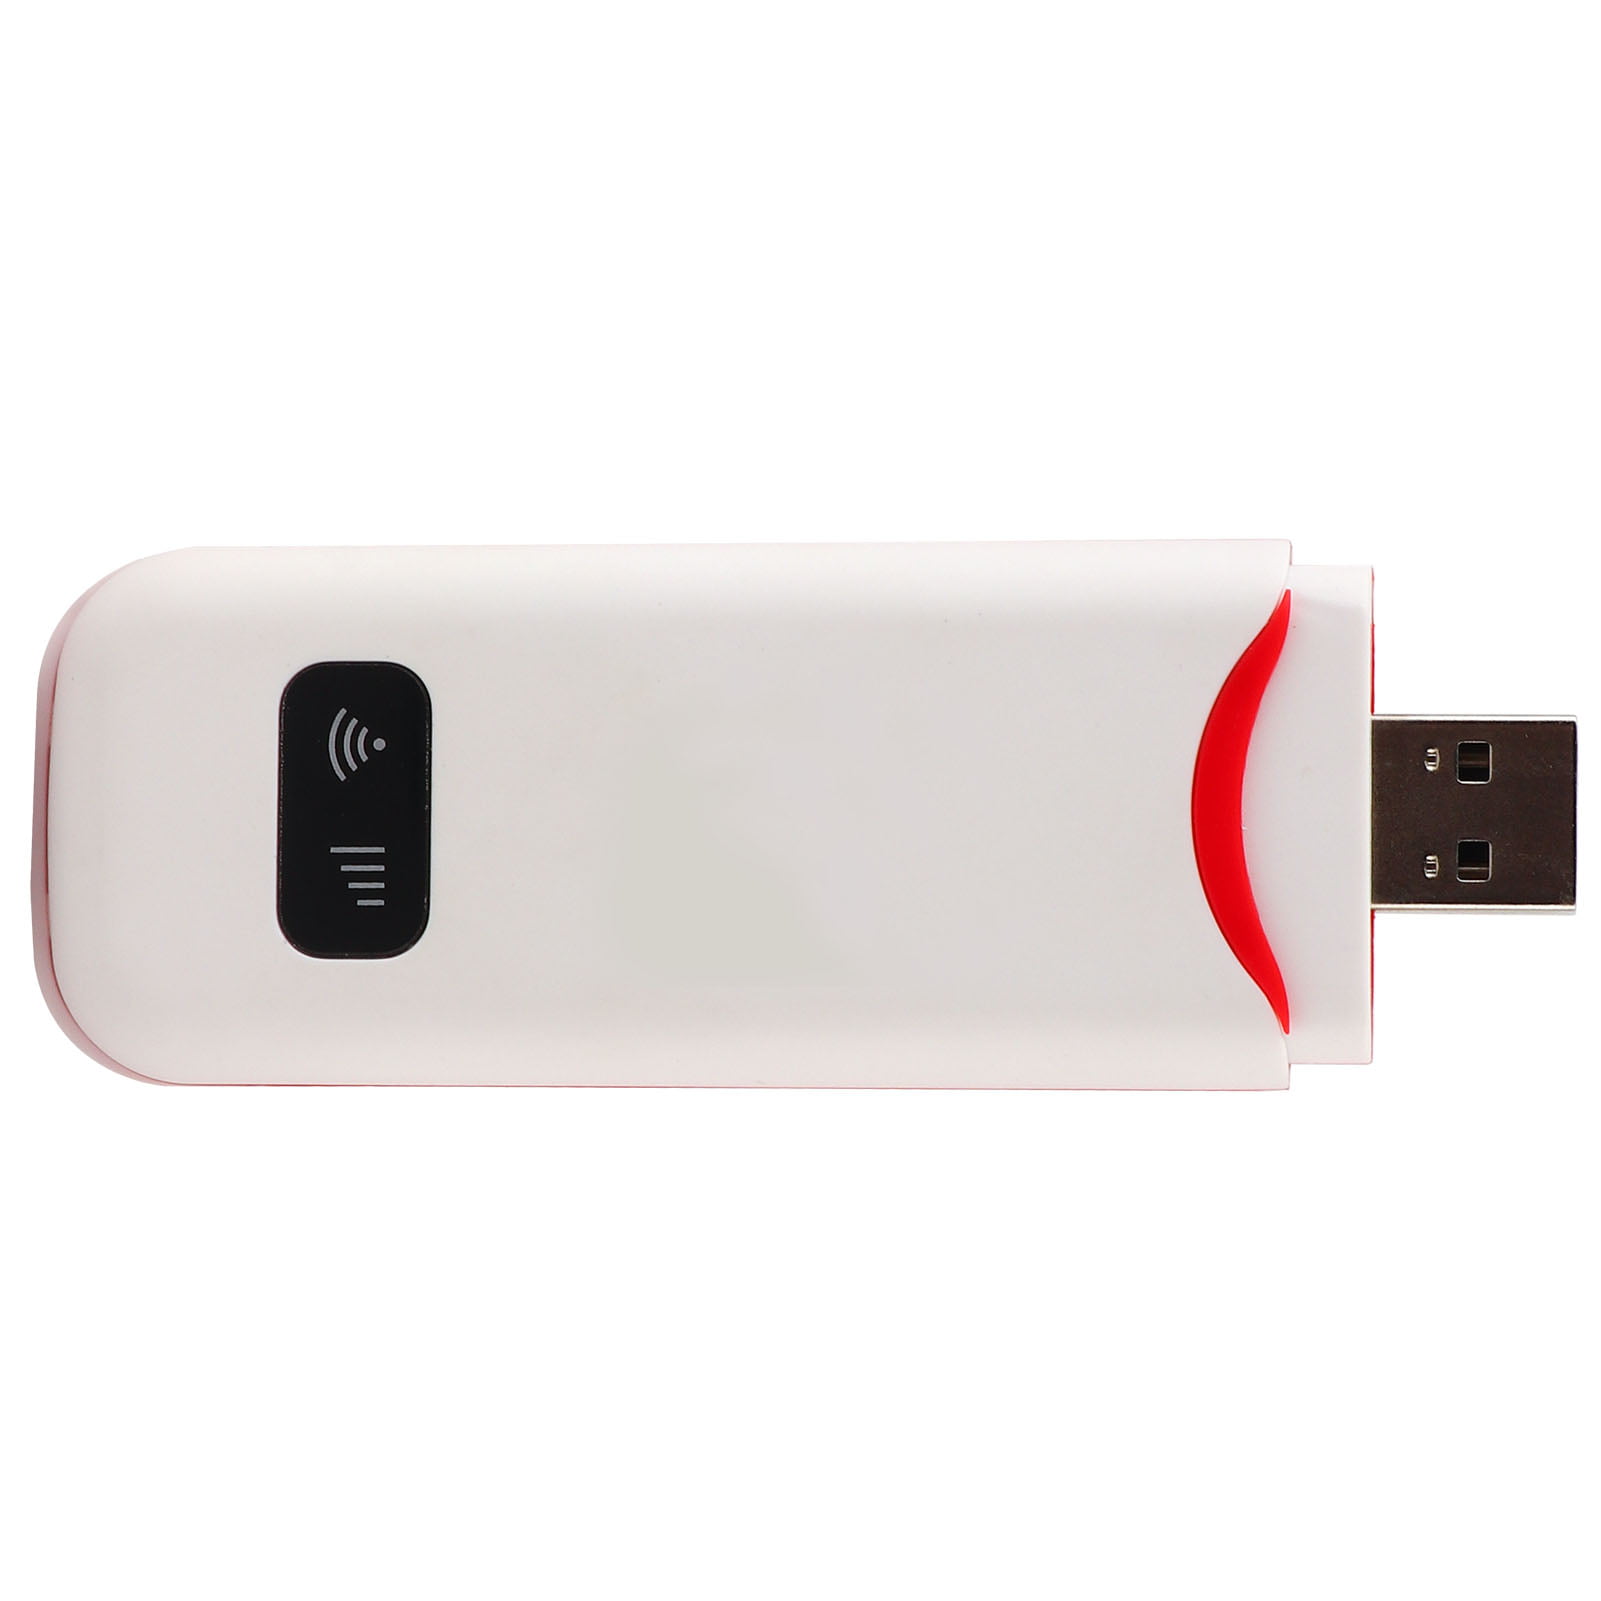 Mavis Laven Adaptador de Red USB Adaptador de Red USB Dongle 4G LTE WiFi Mini Enrutador de Hotspot WiFi inalámbrico Módem Stick para PC Computadora portátil de Escritorio No soporta WiFi 